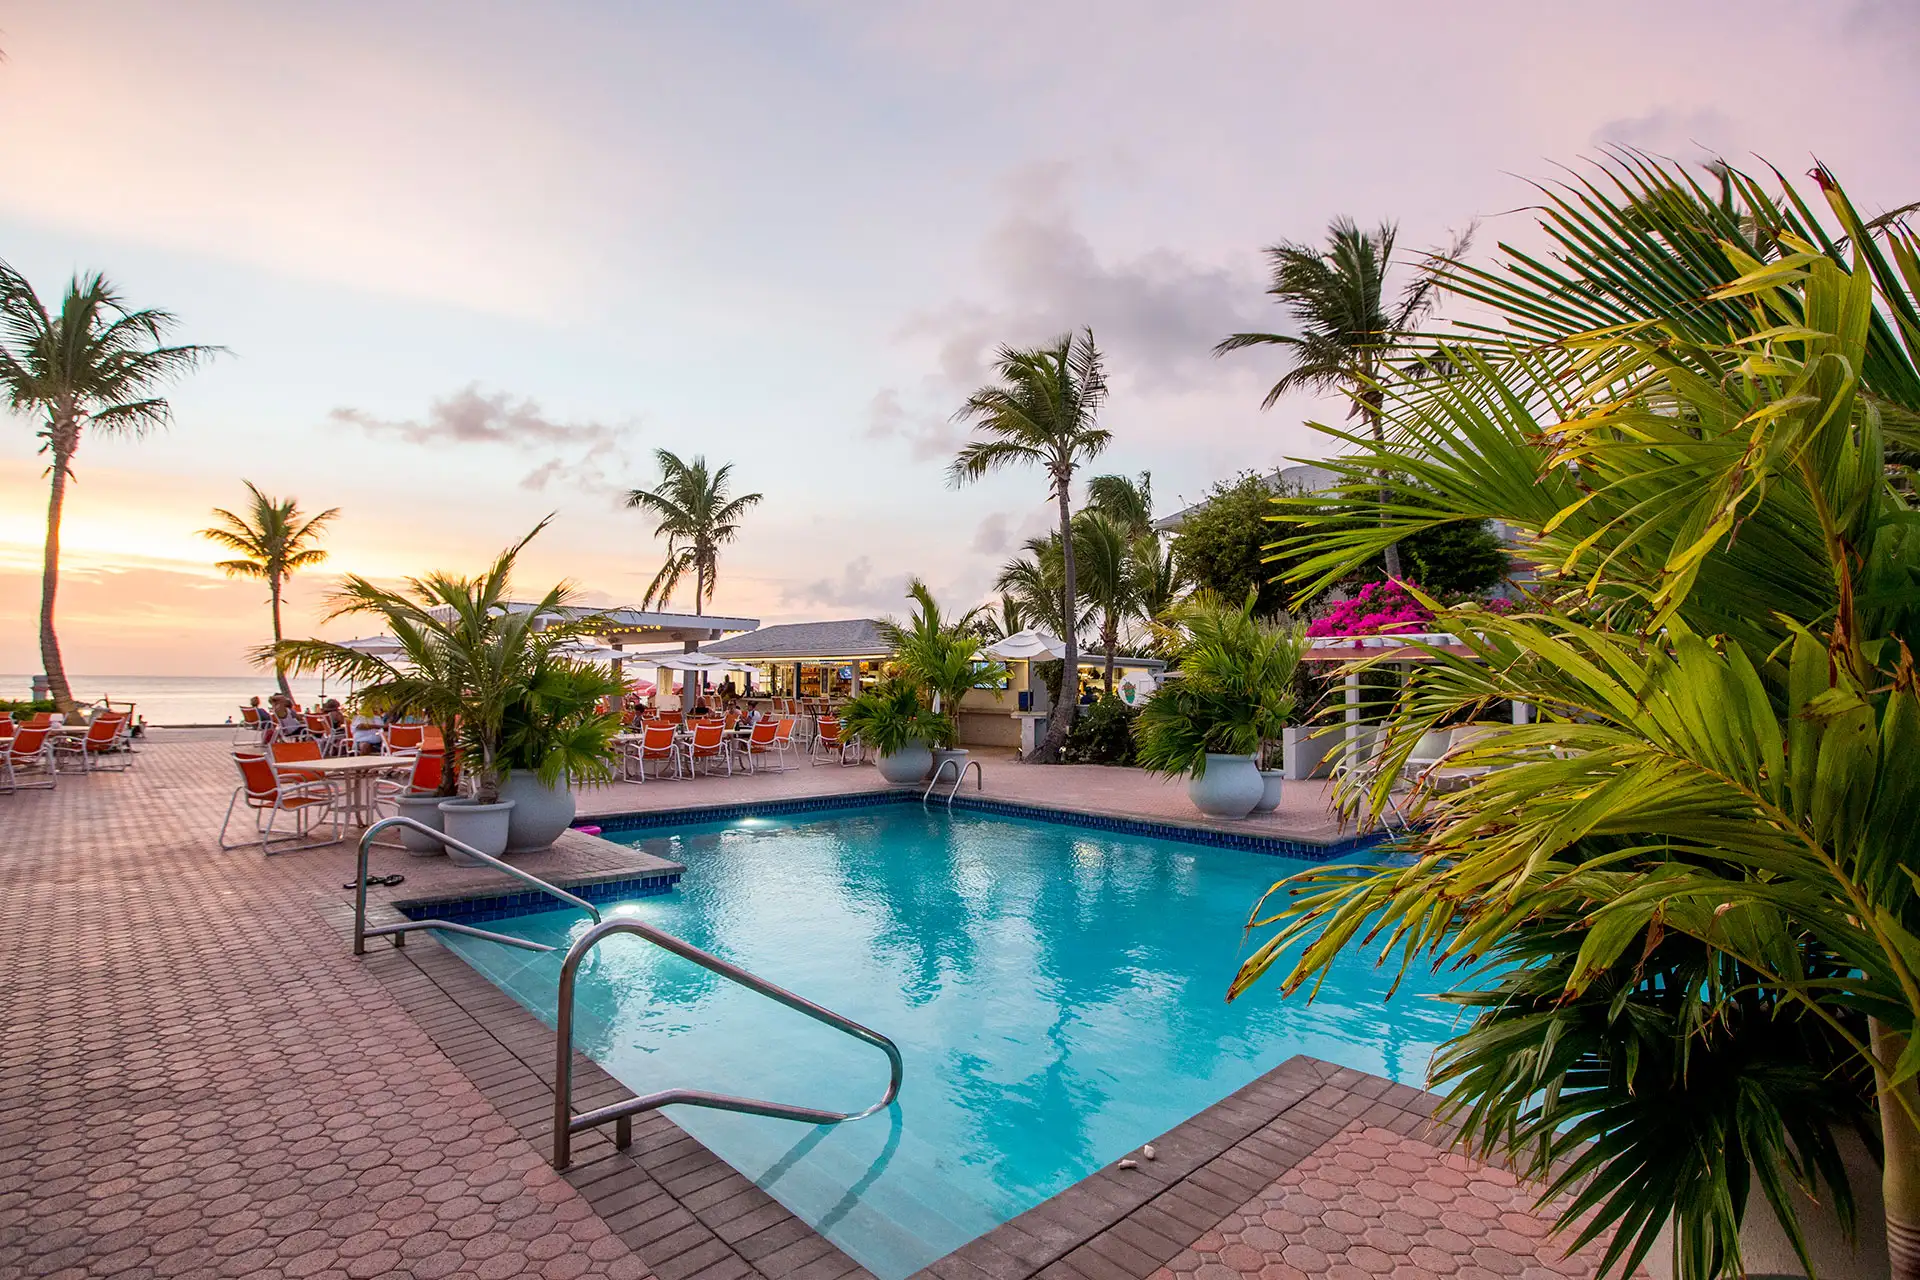 Ocean Club West in Turks and Caicos; Courtesy of Ocean Club Resorts